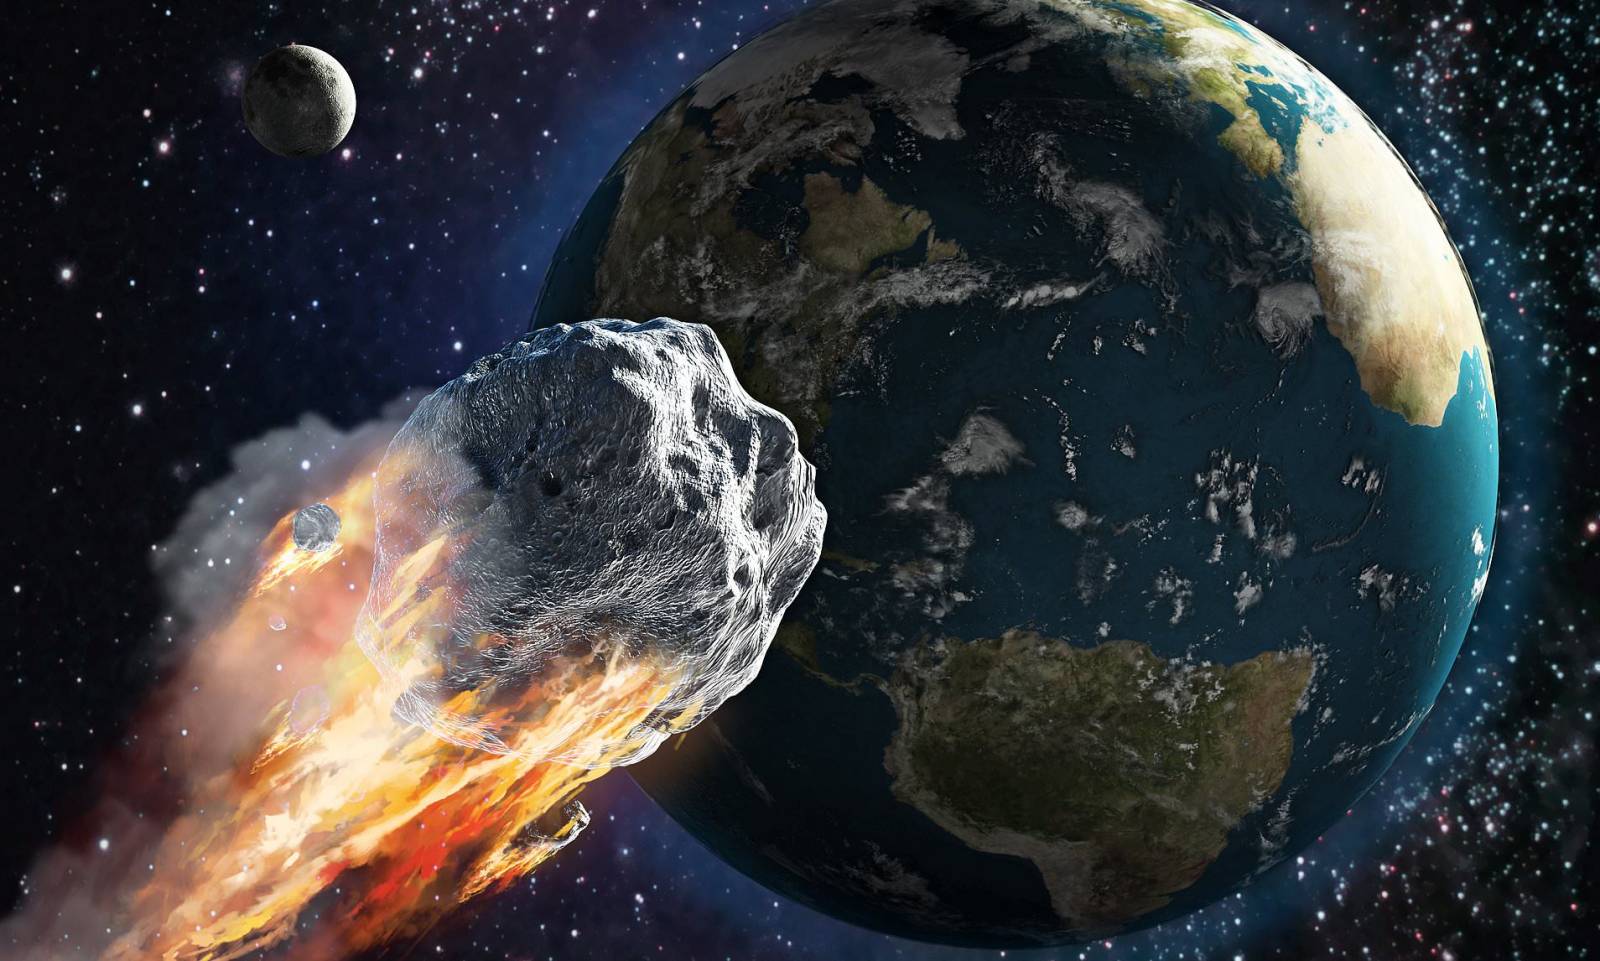 NASA asteroid diameter 1 km